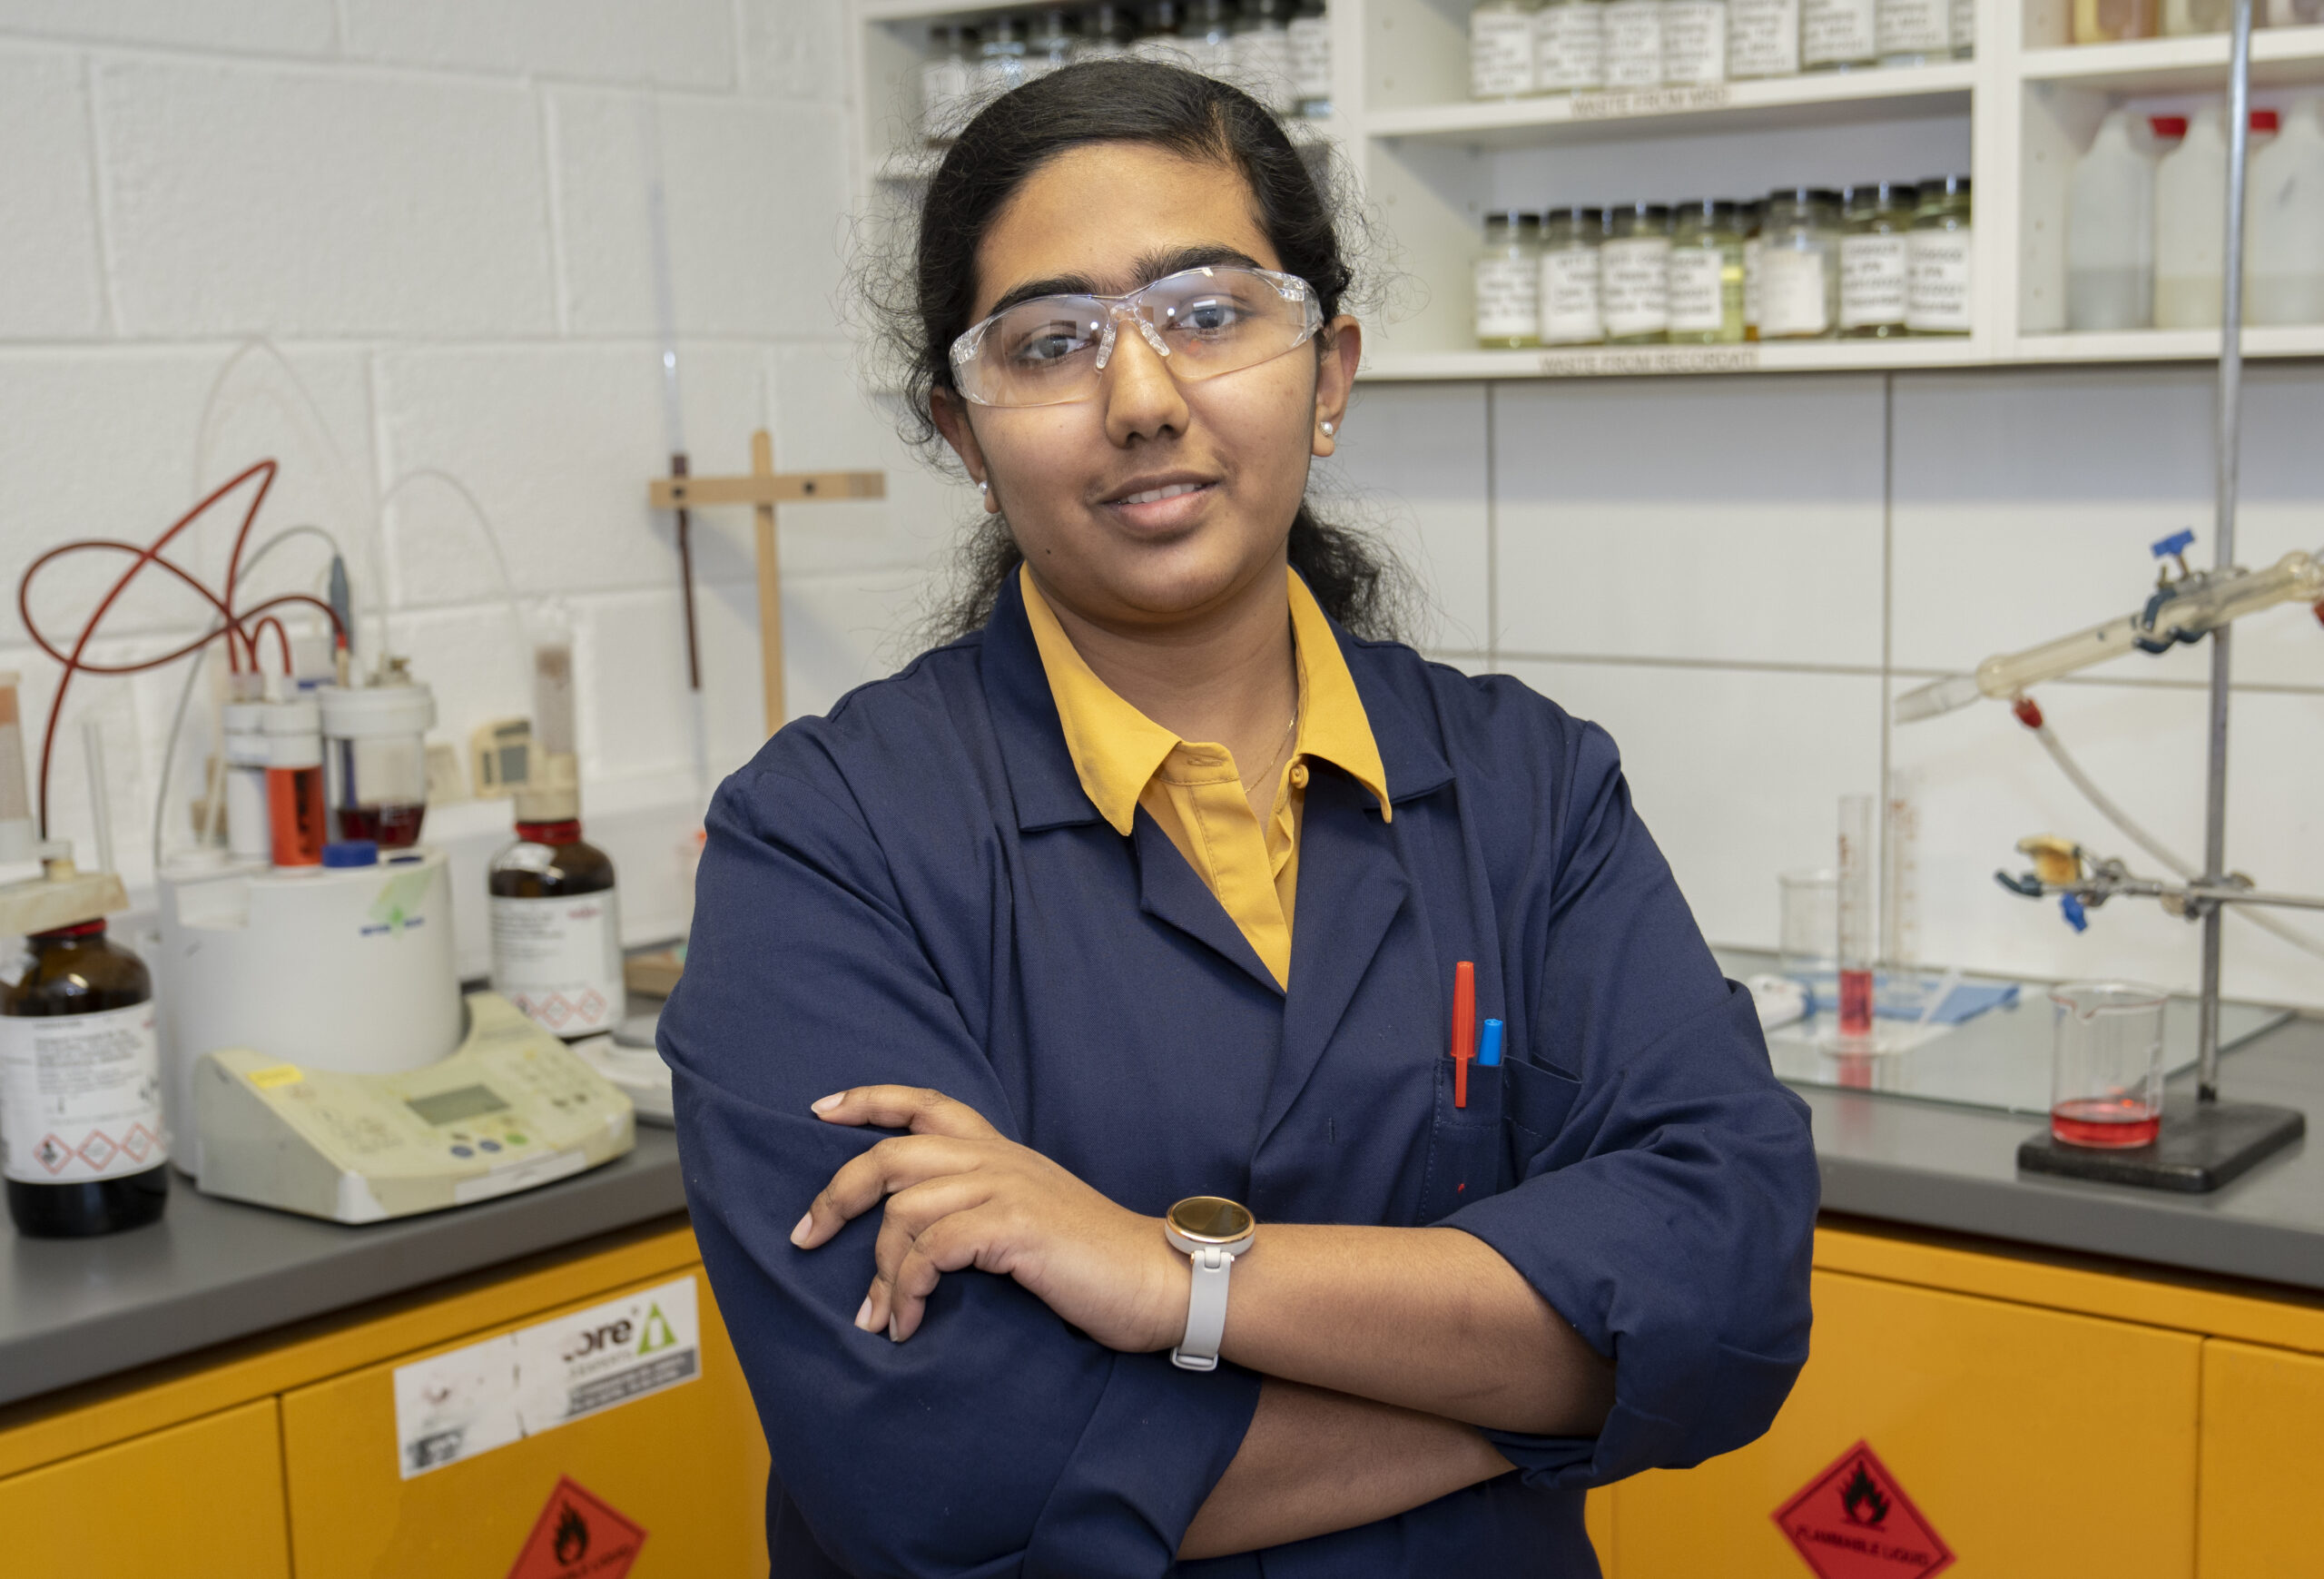 Women in Science Day 2022: Meet Angel Joseph, Pharmaceutical Chemist at Soltec, Ireland, Ltd.